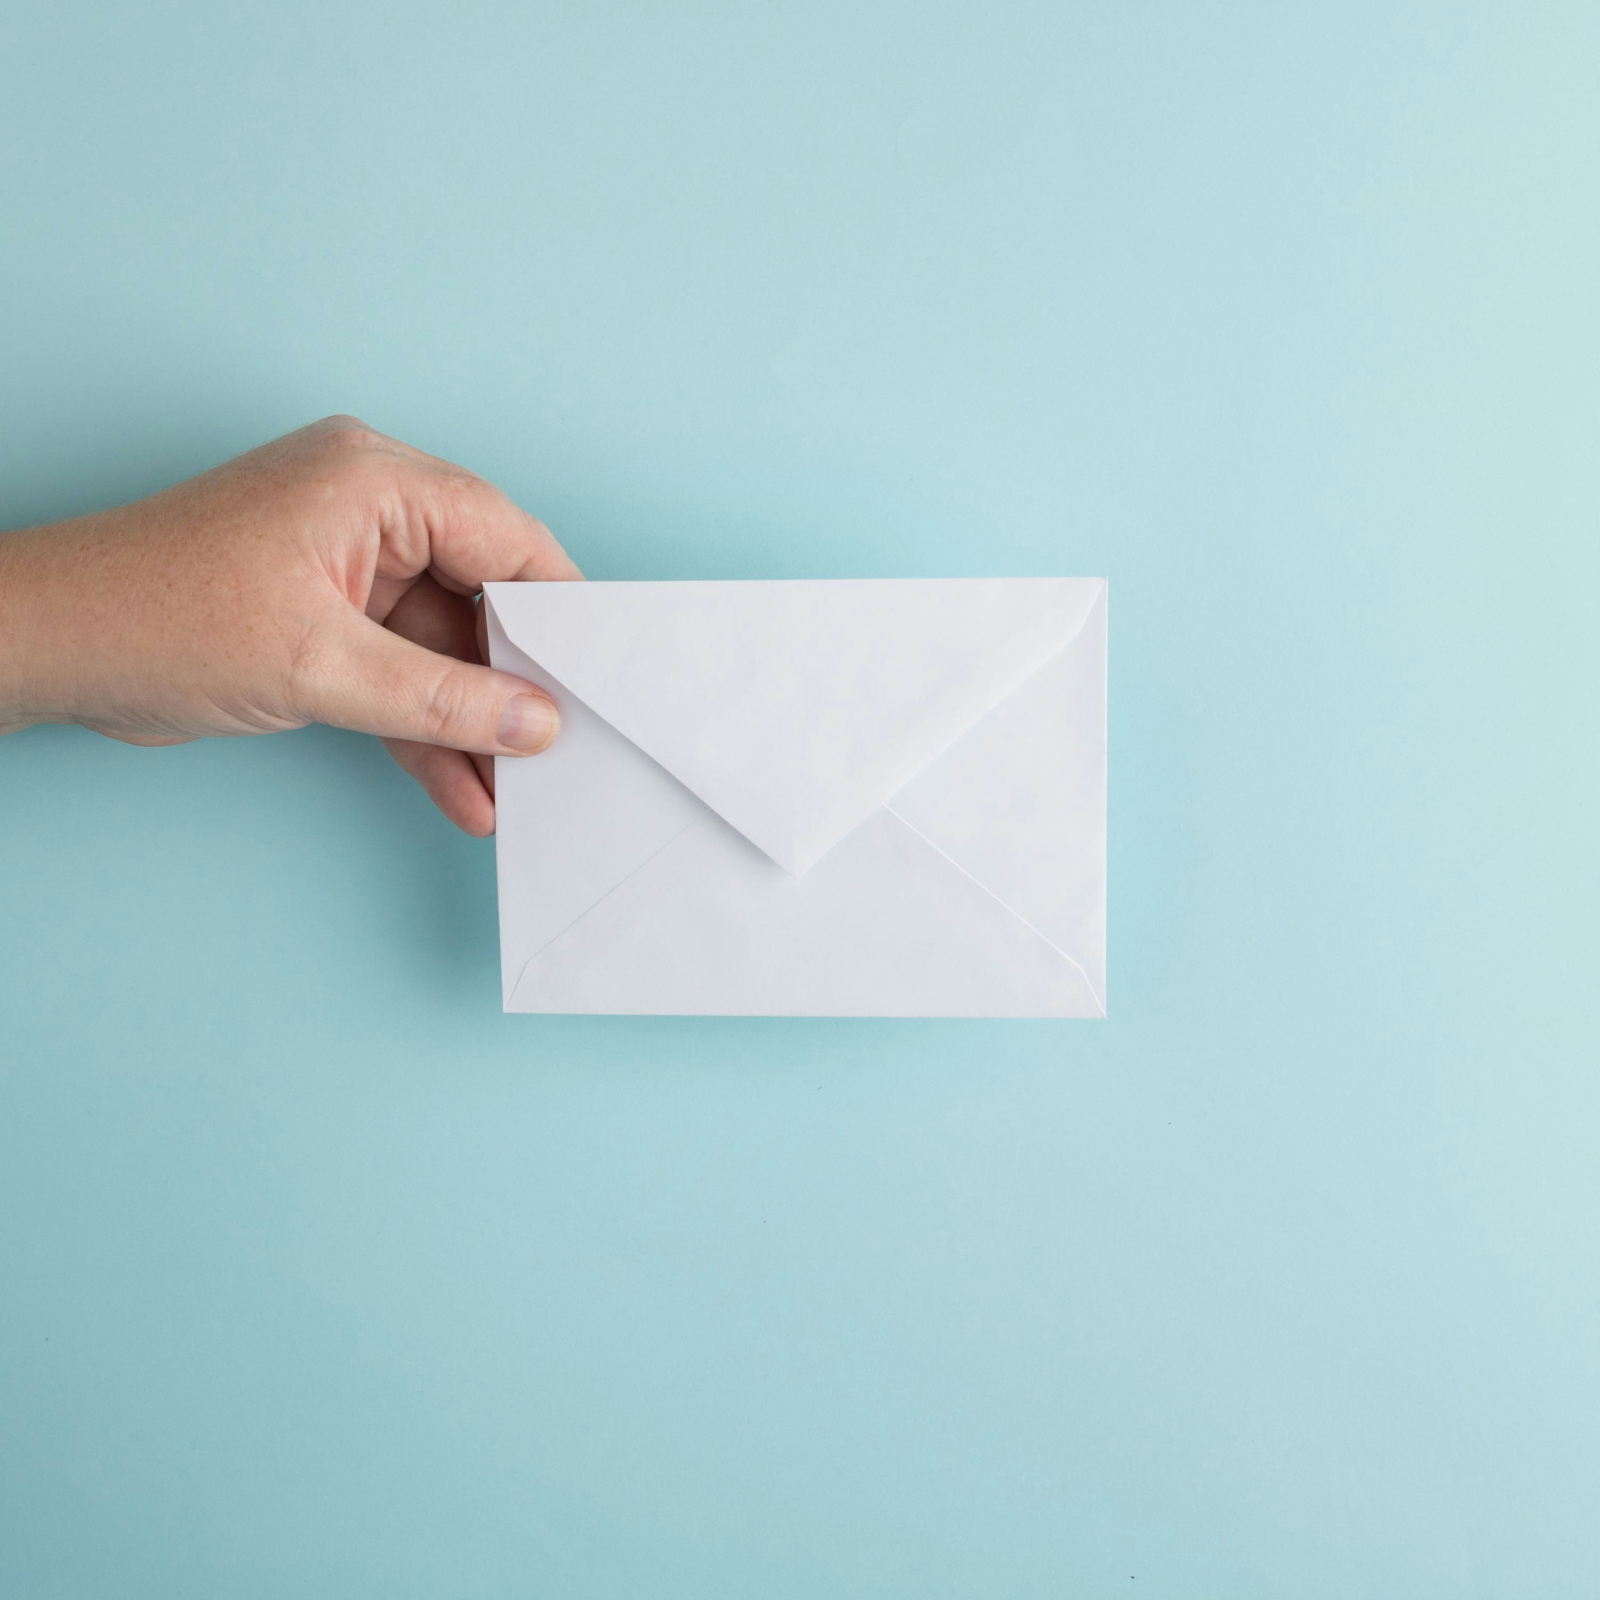 Hand holding a white envelope